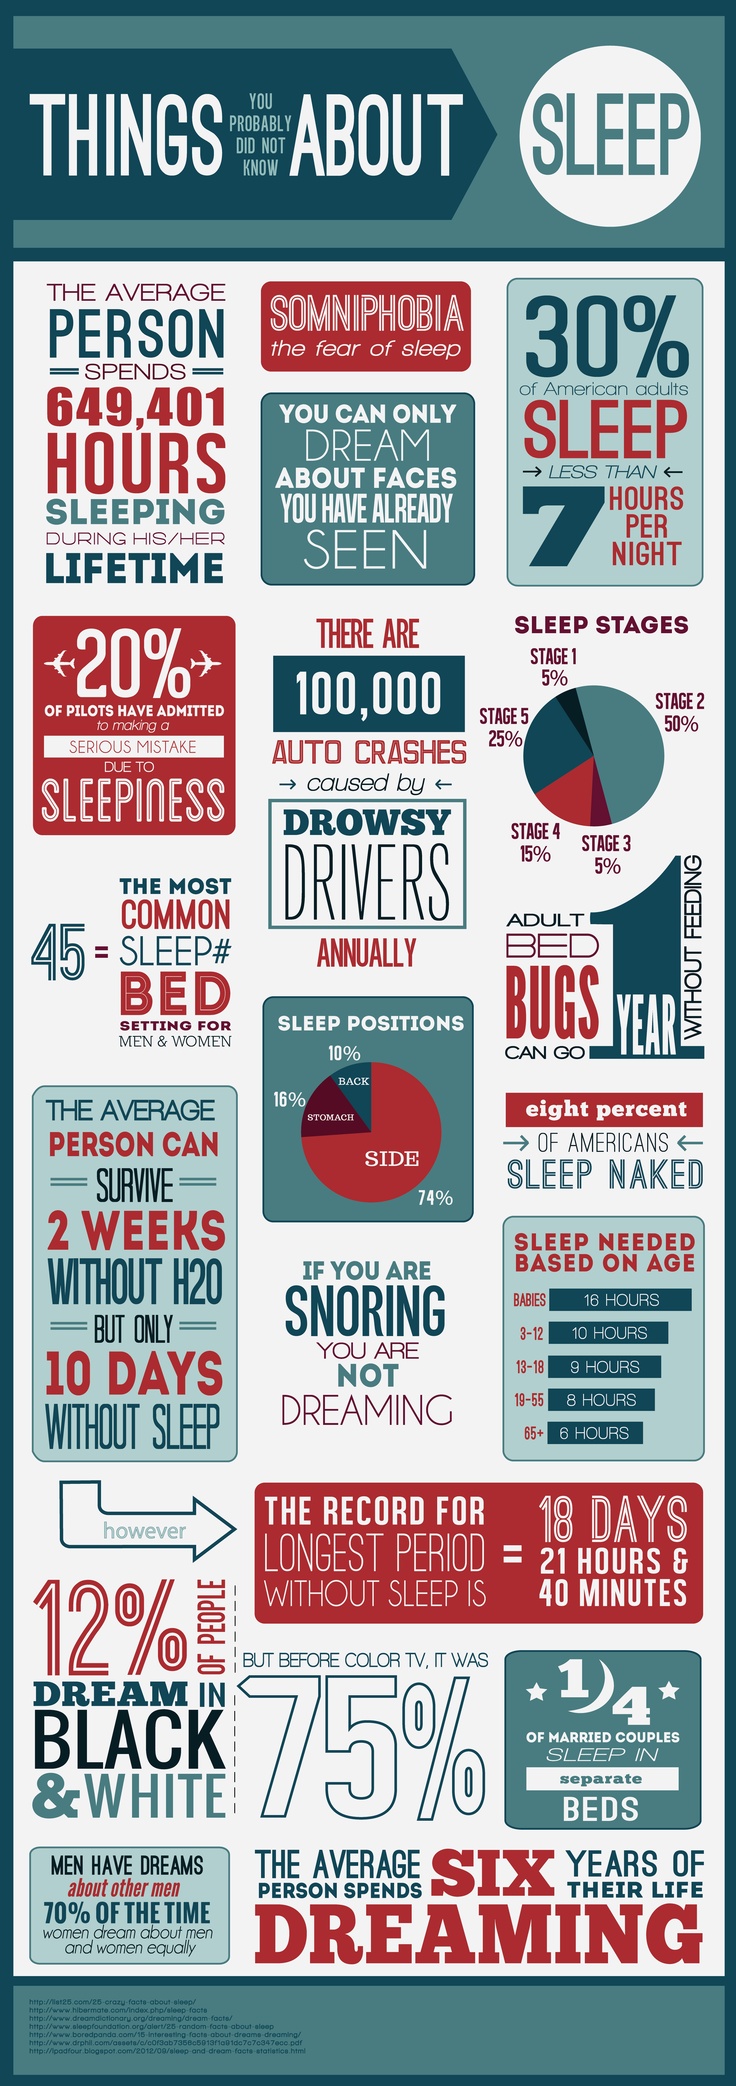 sleep-infographic.jpg